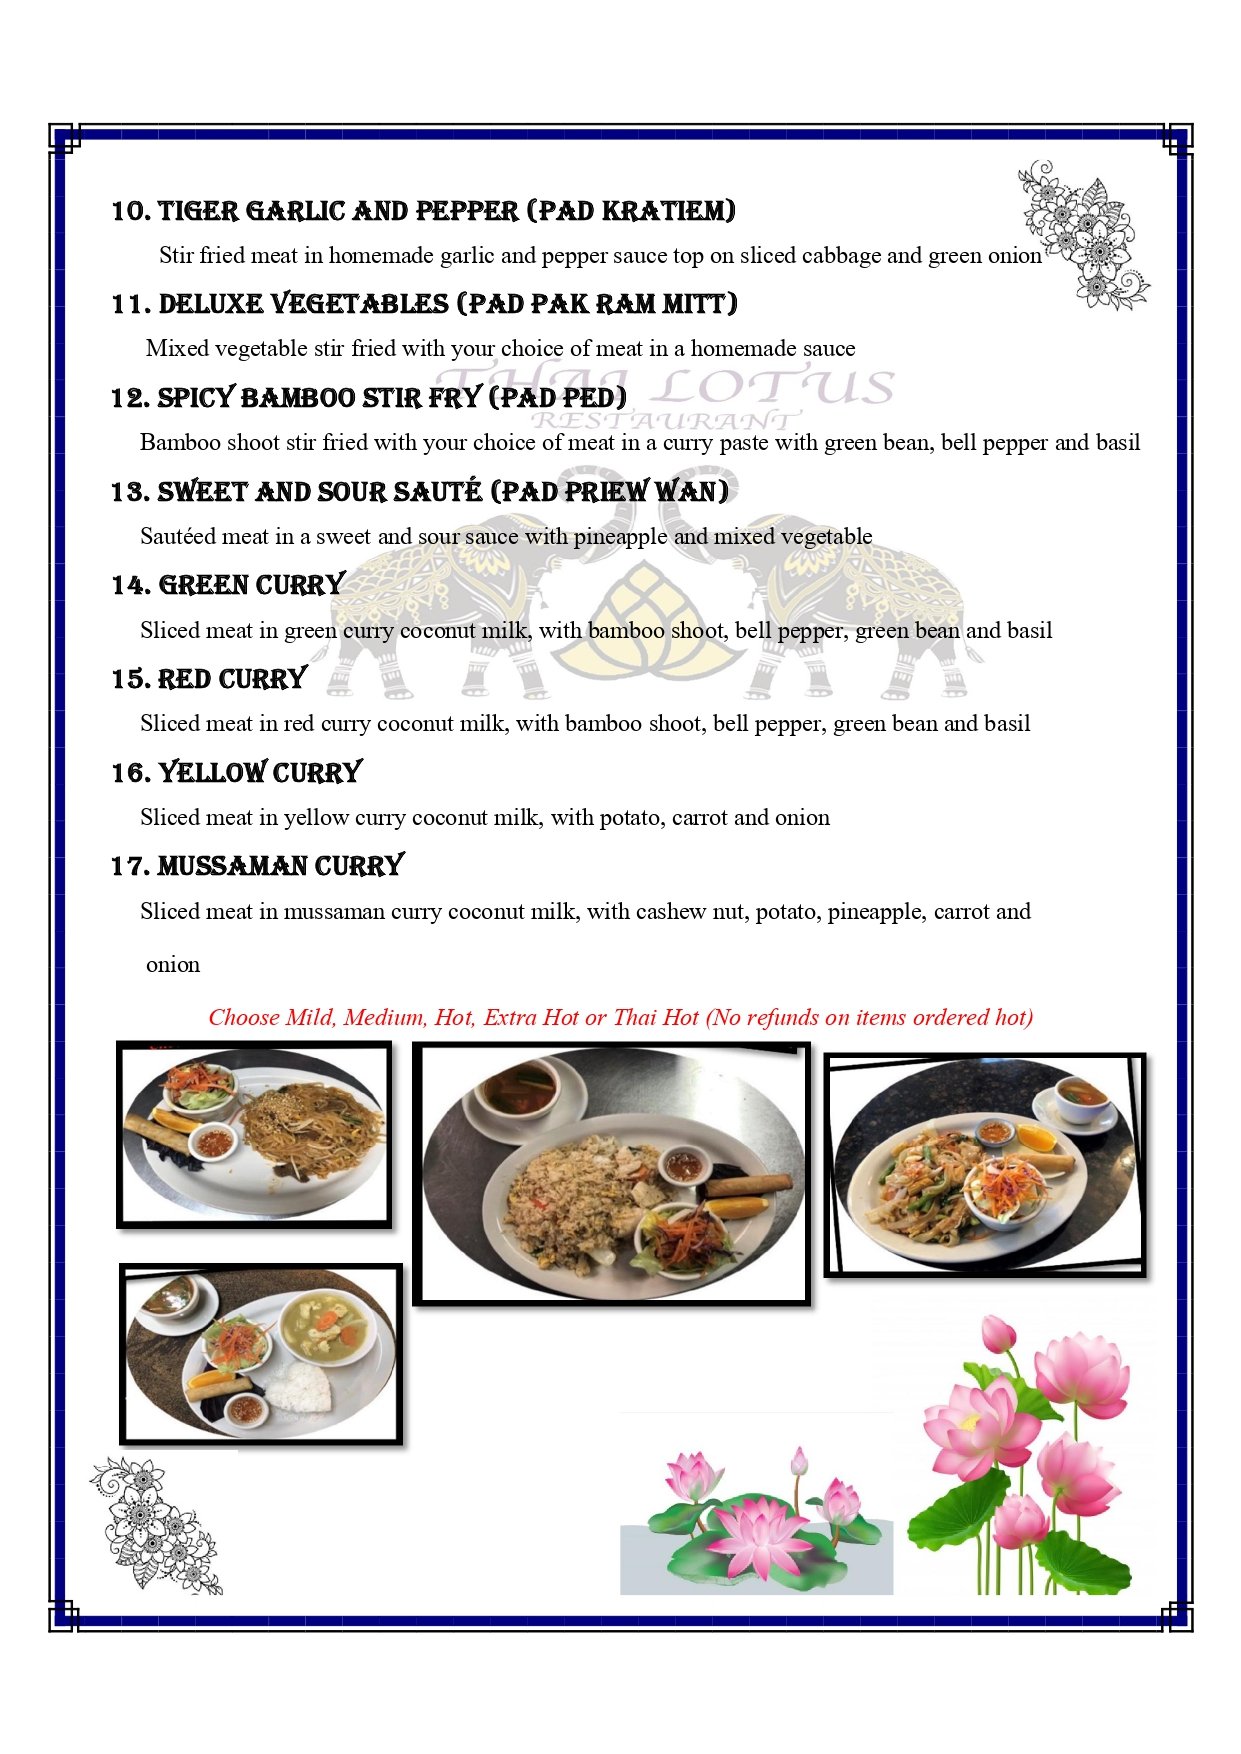 Thai Lotus lunch specials menu_page-0002.jpg